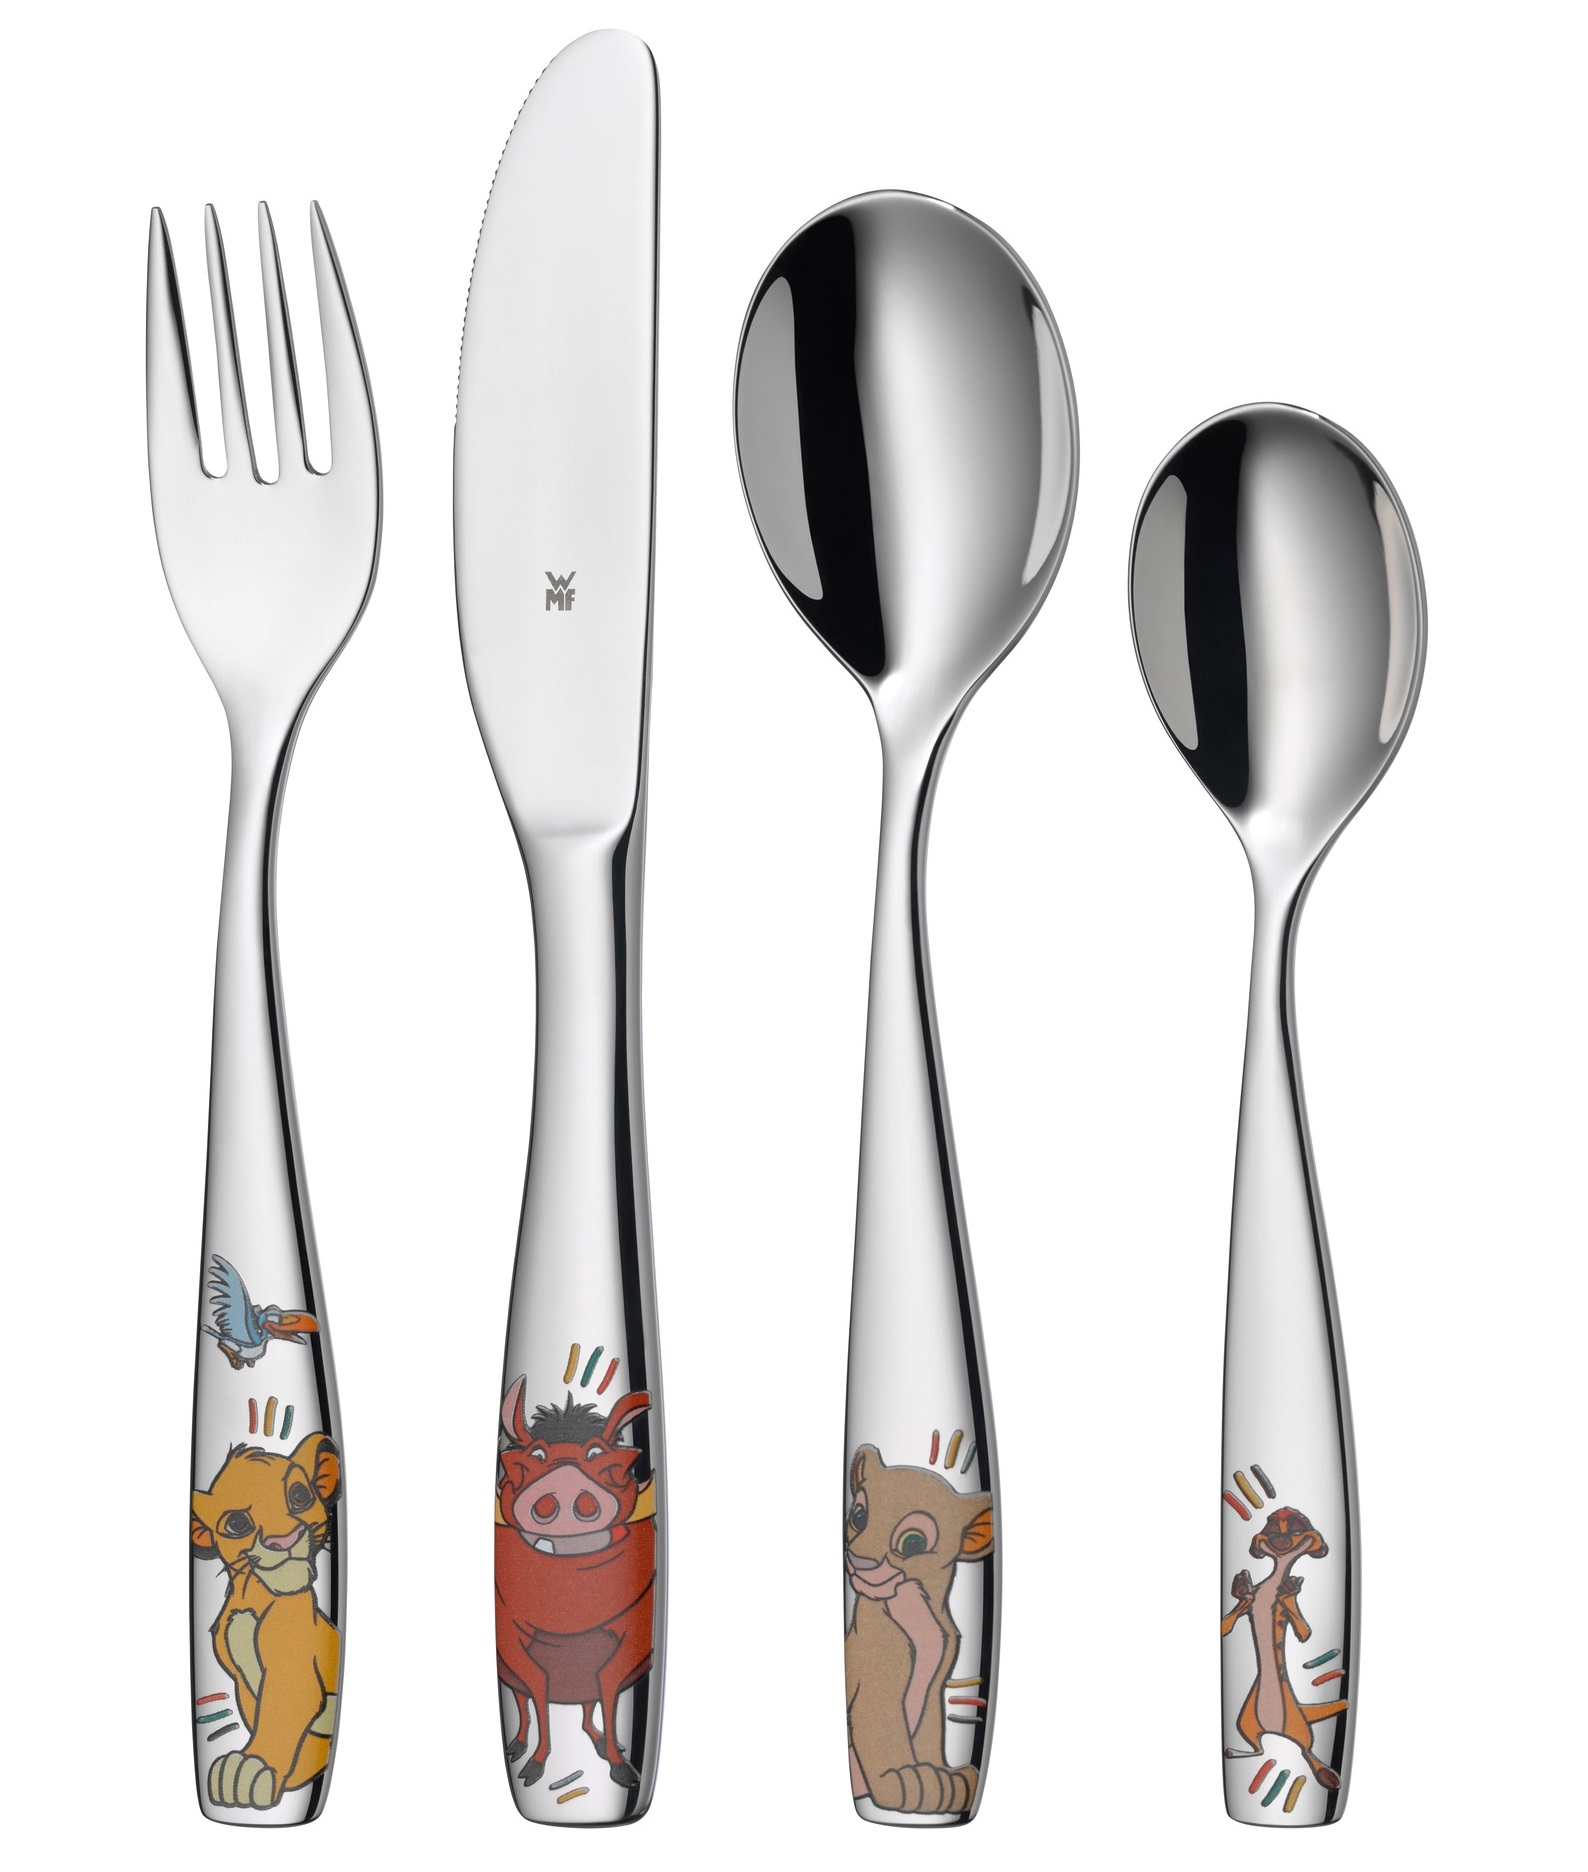 Details about   WMF Children's Cutlery Set 4 Pieces Winnie The Pooh Stainless Steel Genuine New 